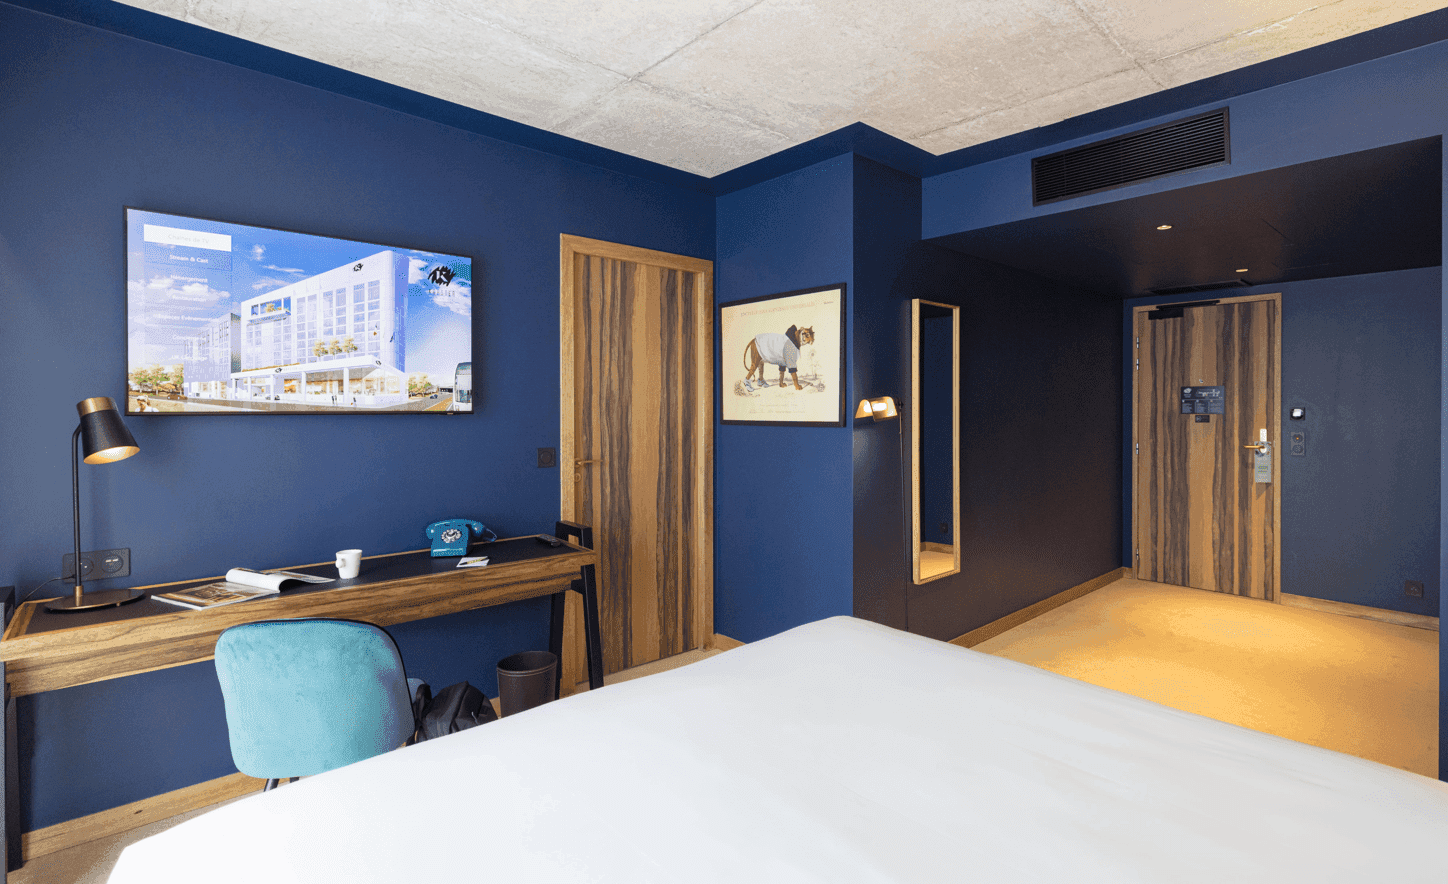 Bed & work area in Unik Room at Kopster Hotel Paris Ouest Colombes